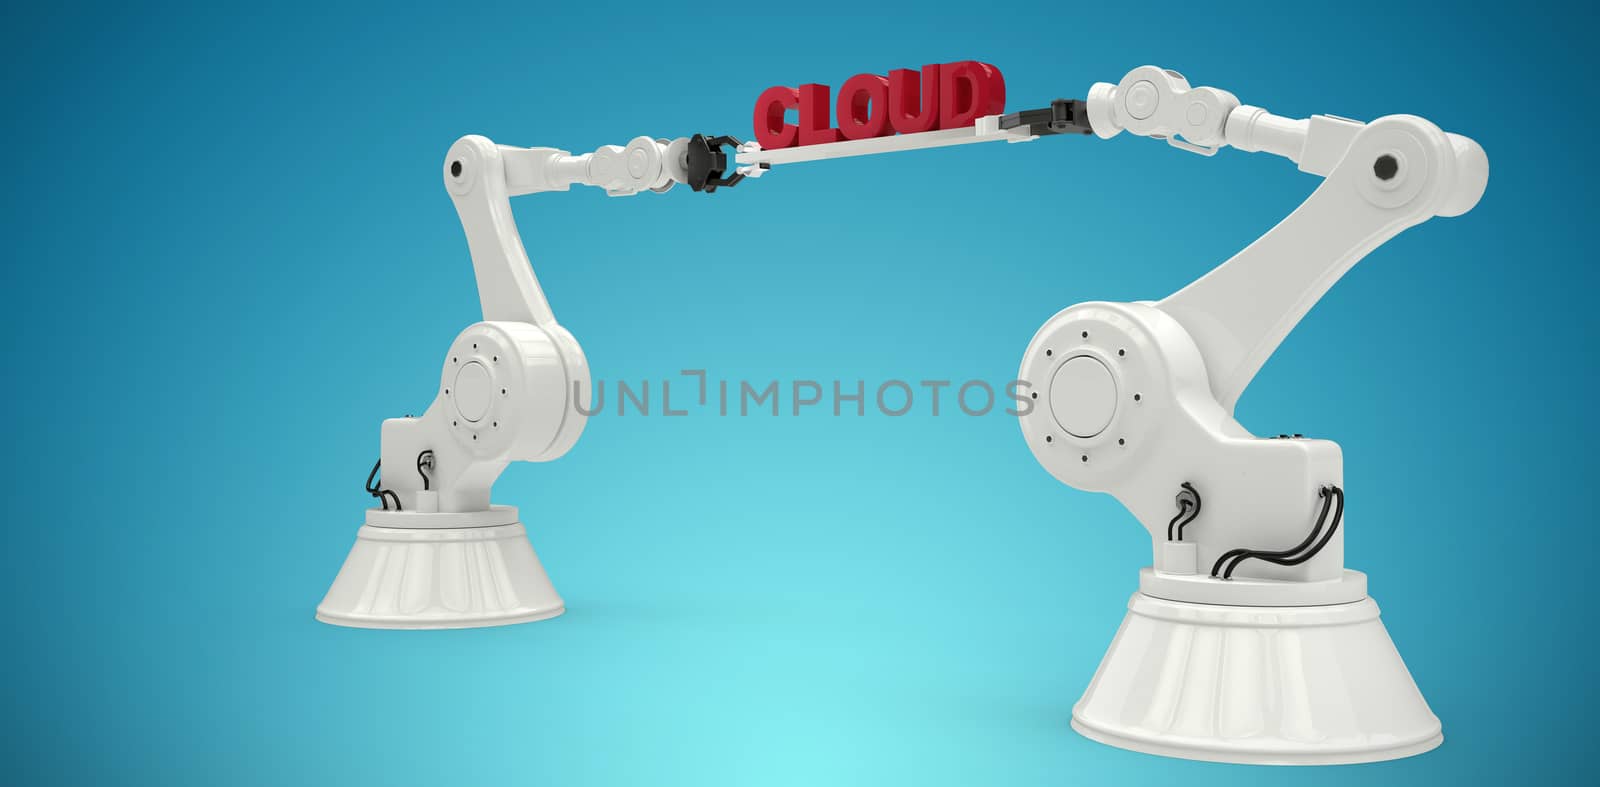 Mechanical robotic hands holding cloud text against white background against blue vignette background